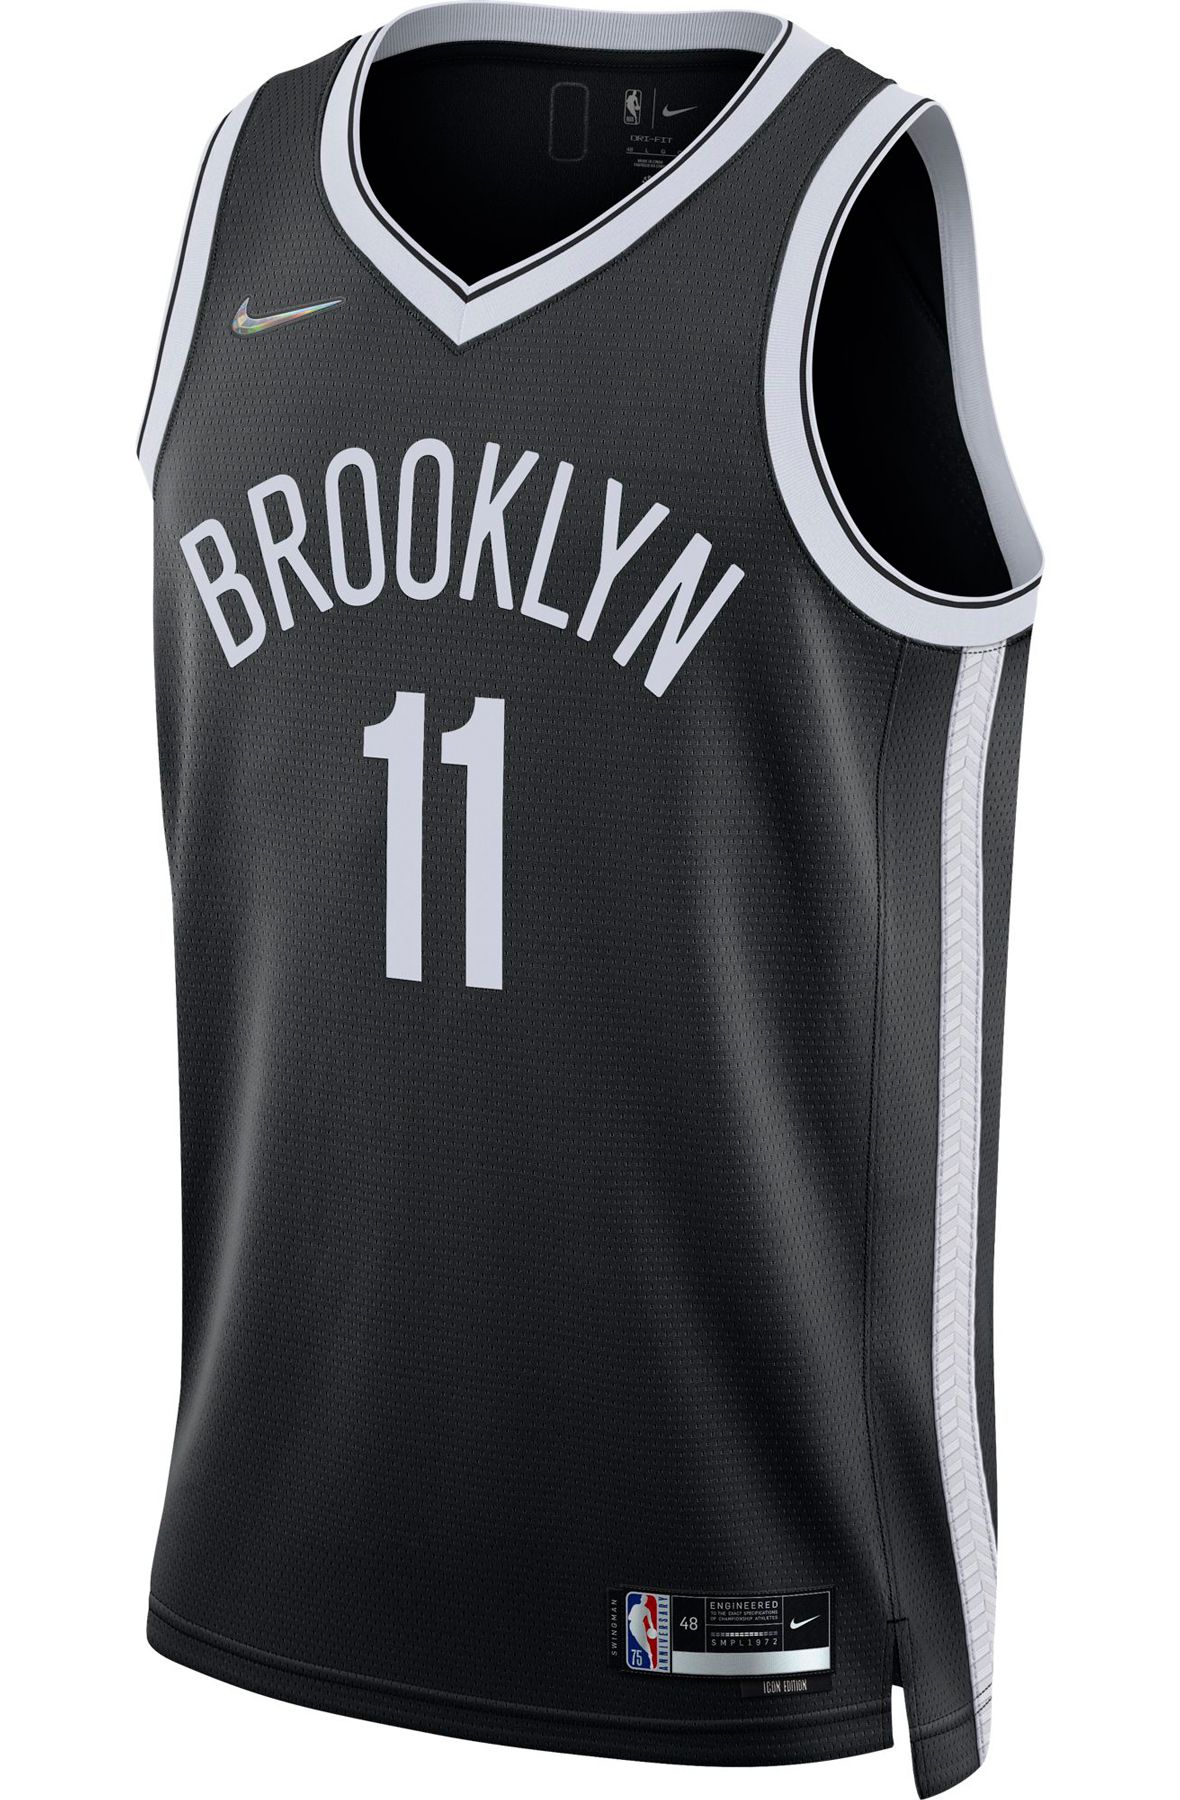 STARTER Men's Starter Black/Gray Brooklyn Nets NBA 75th